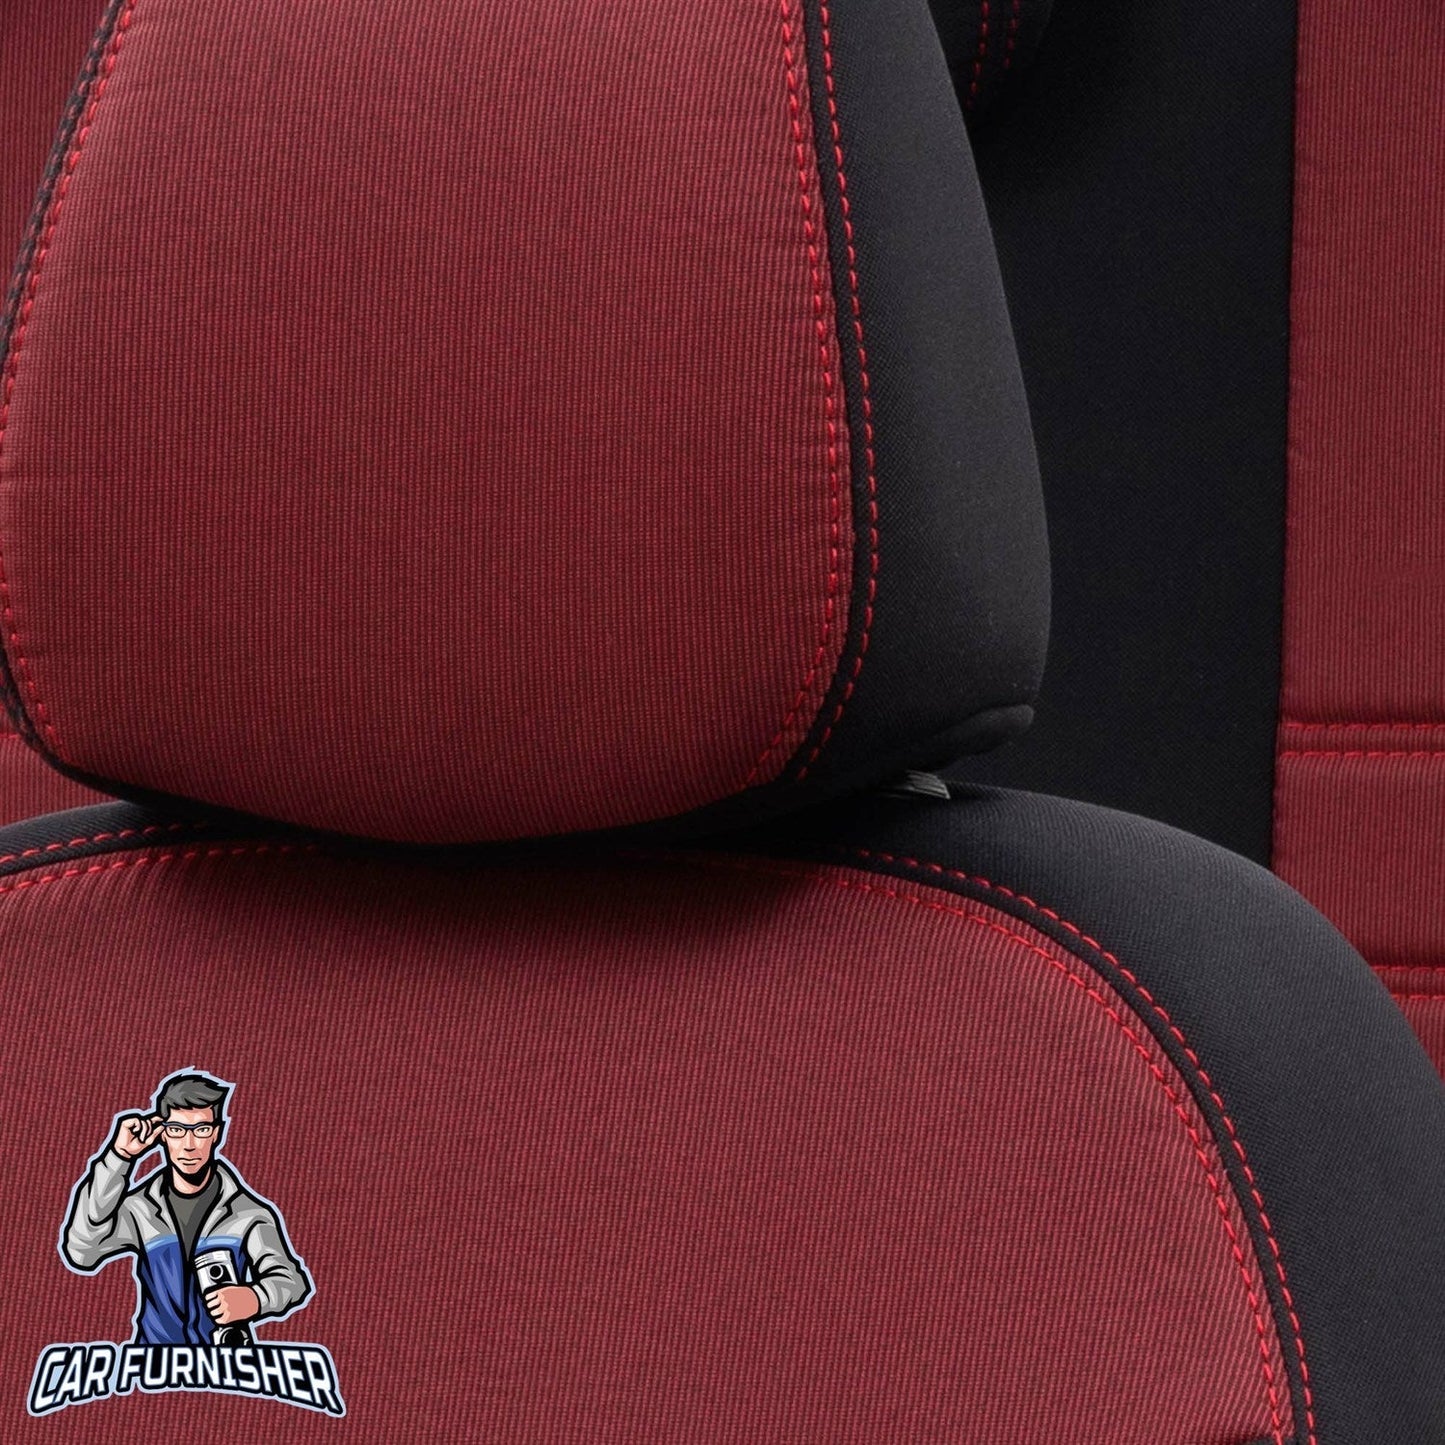 Ford Kuga Seat Covers Original Jacquard Design Red Jacquard Fabric